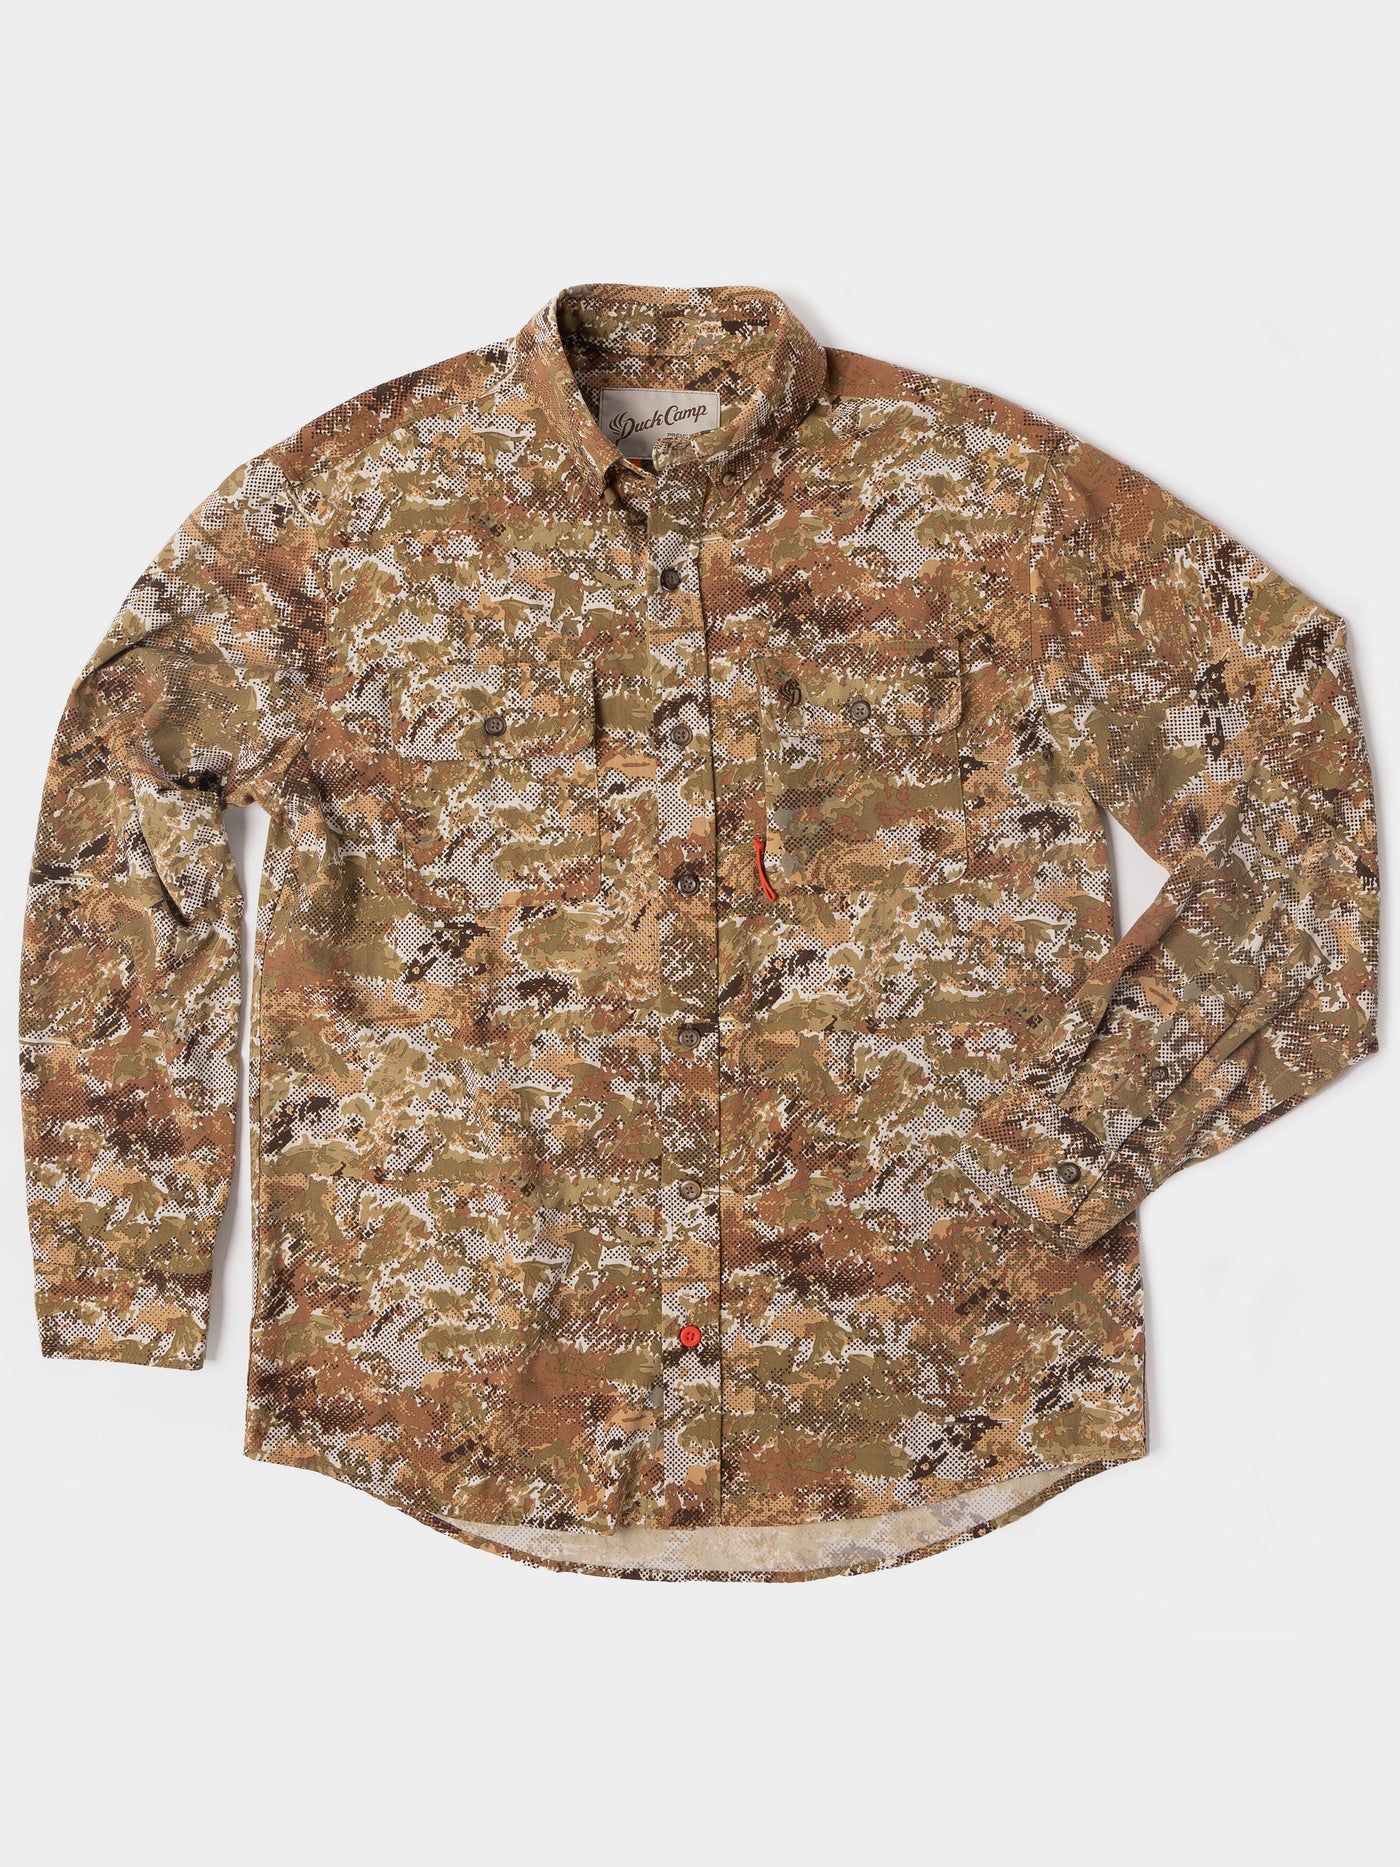 Duck Camp Lightweight Hunting Shirt - Long Sleeve - Midland M